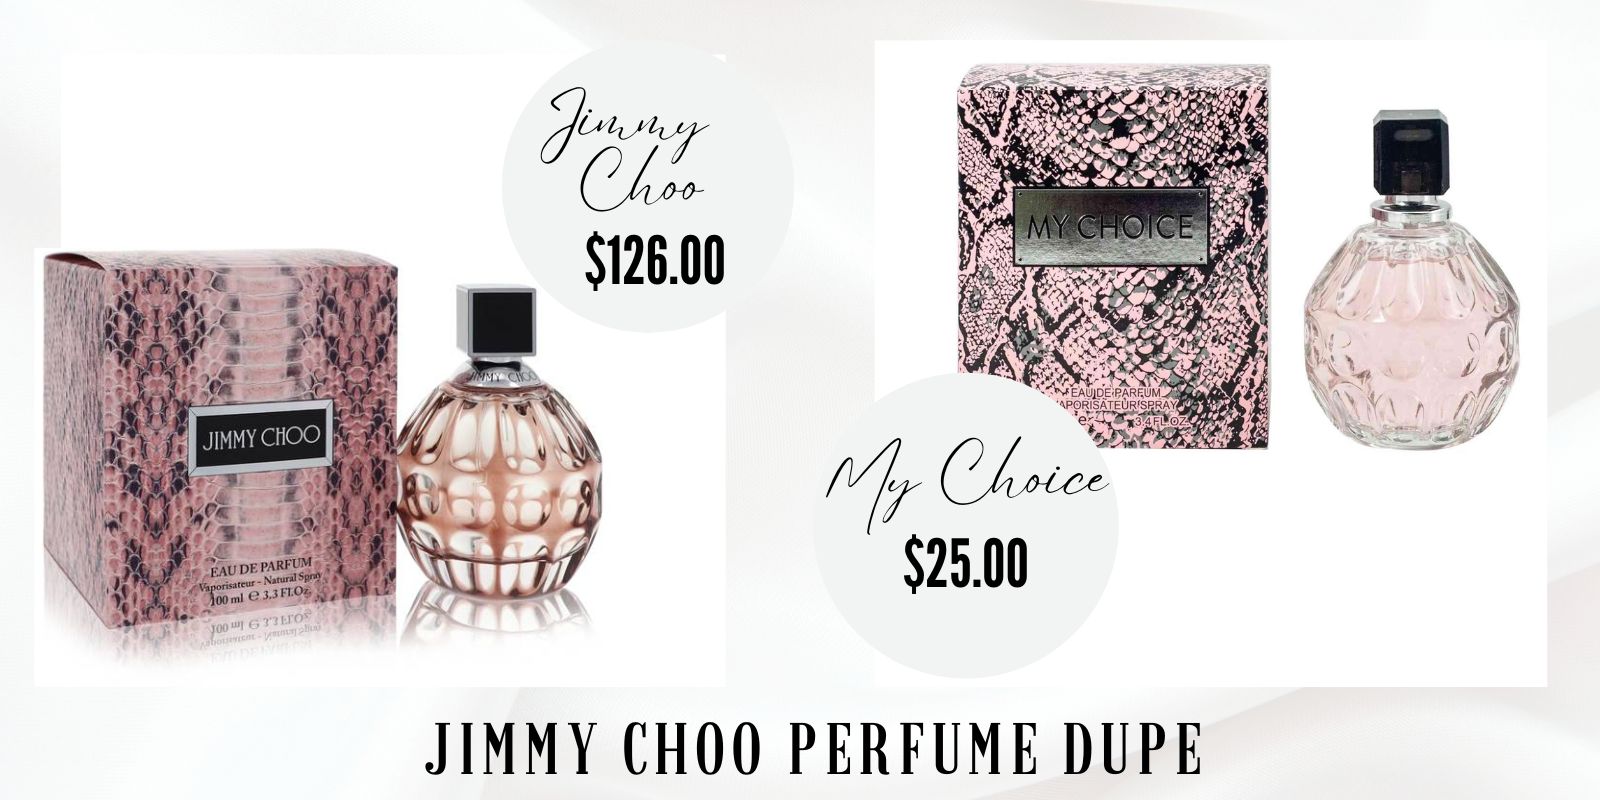 Jimmy Choo Perfume Dupe: My Choice Eau de Parfum